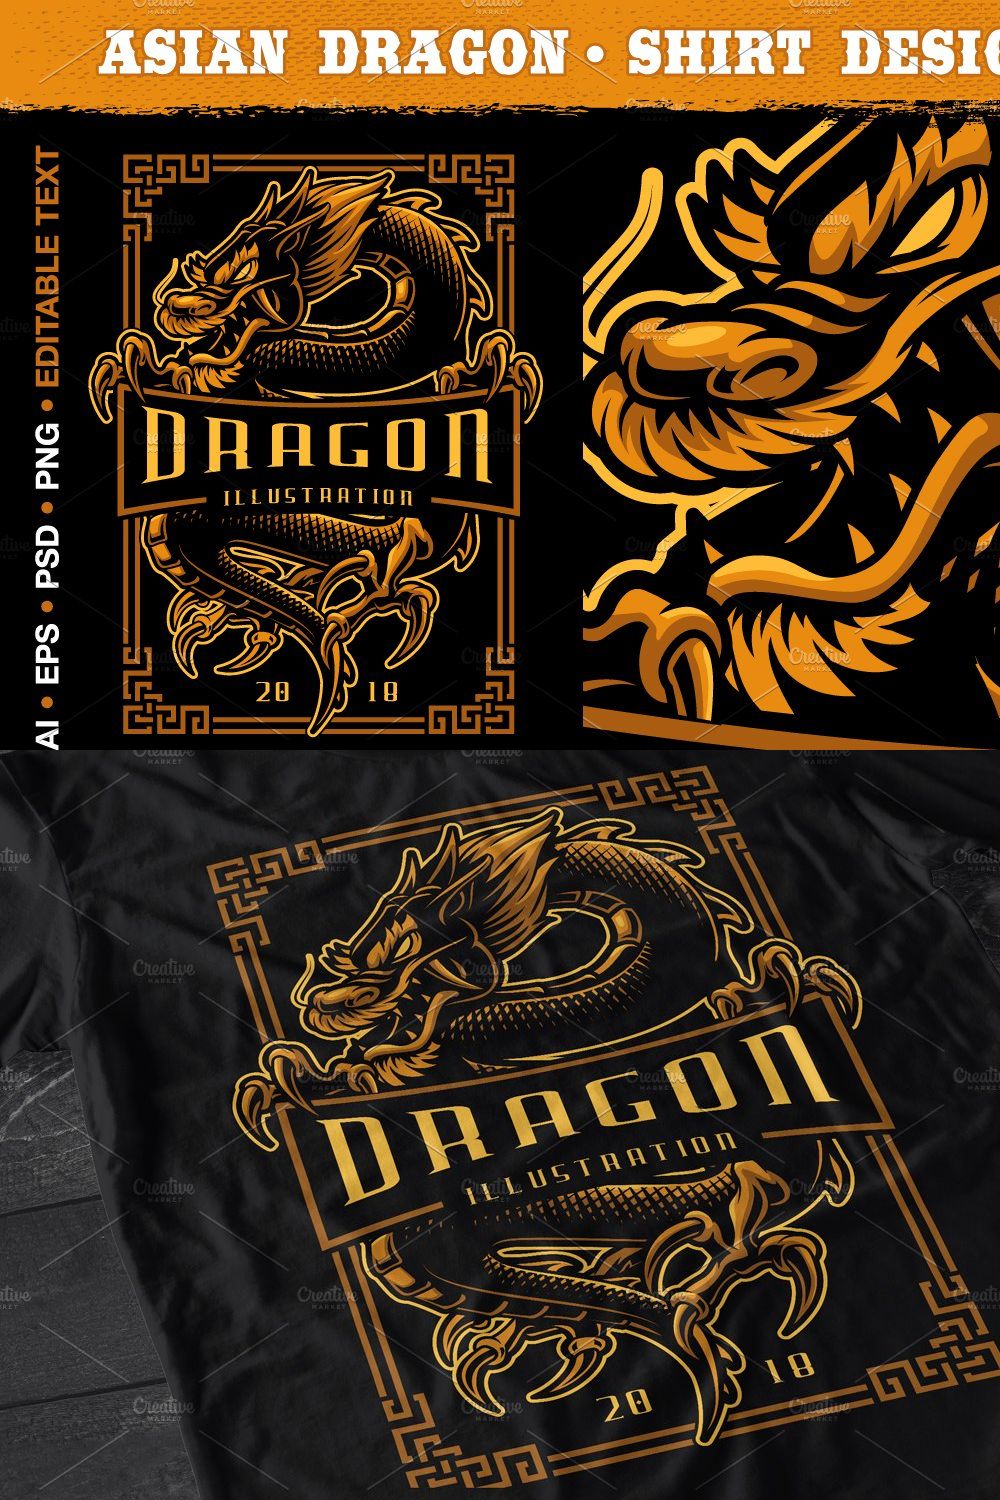 Asian Dragon pinterest preview image.